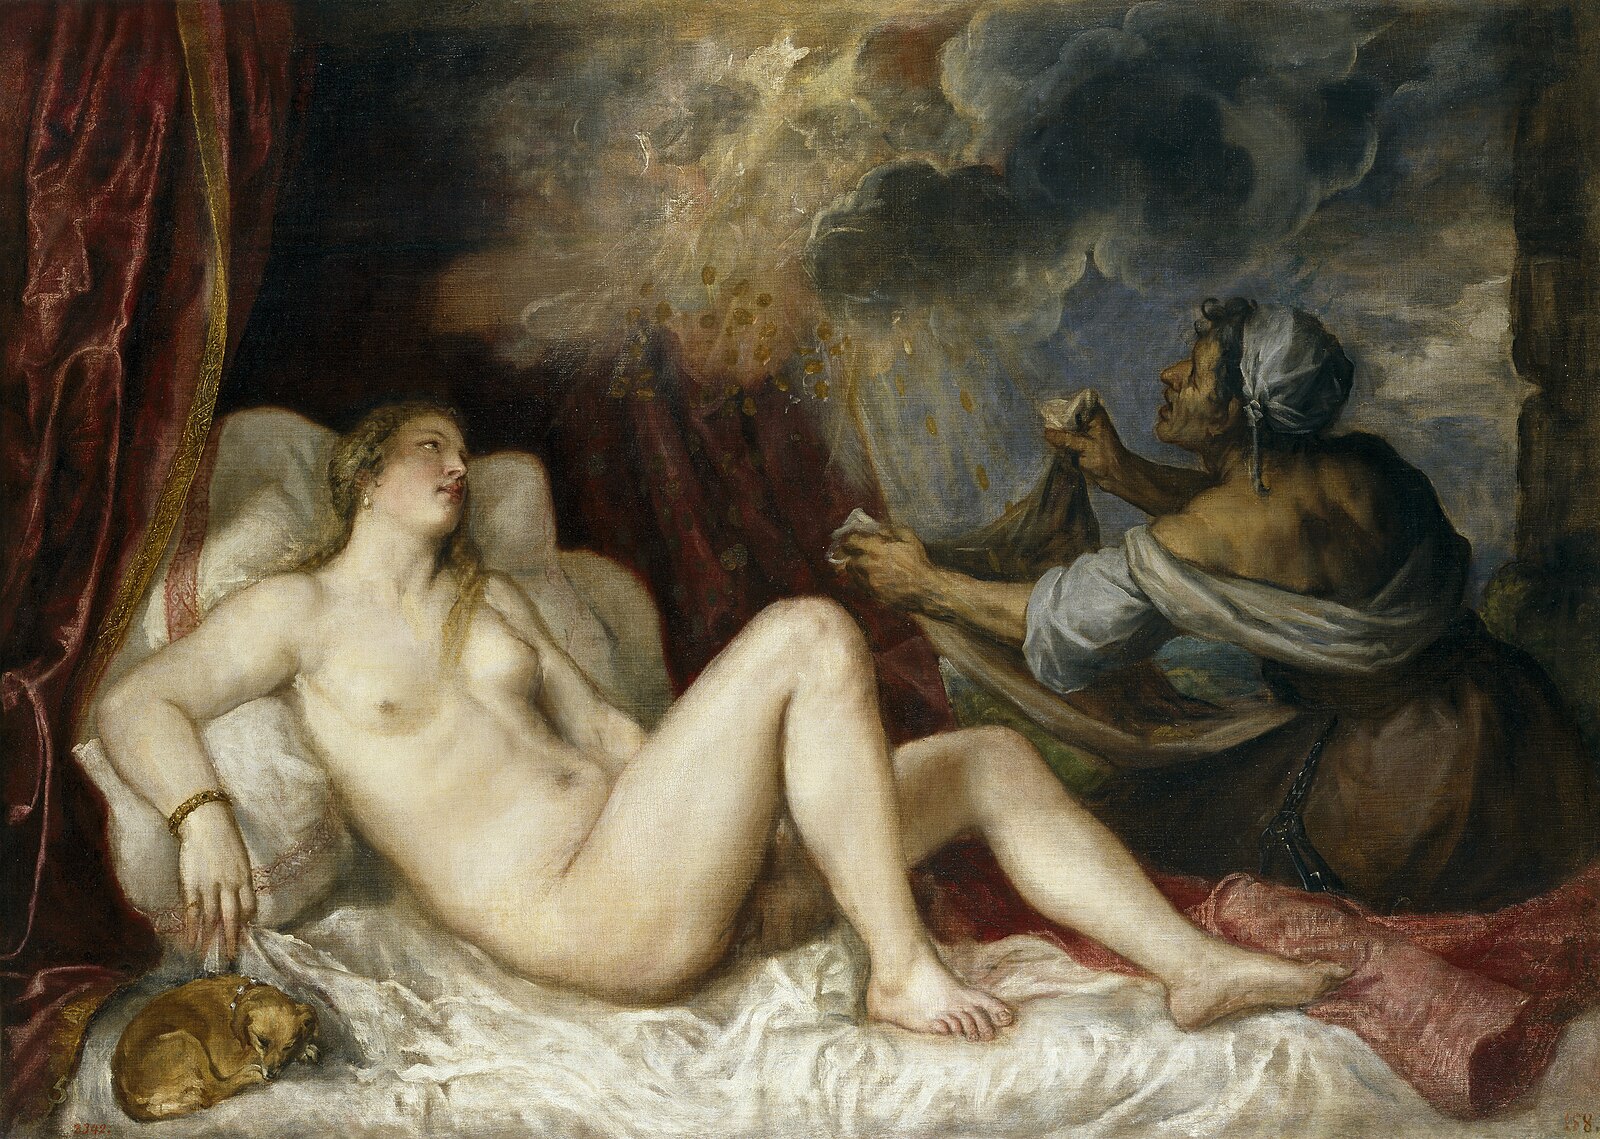 Zeus' lovers:Titian, <em>Danaë with Nursemaid or Danaë Receiving the Golden Rain</em>, 1553–1554, Museo del Prado, 